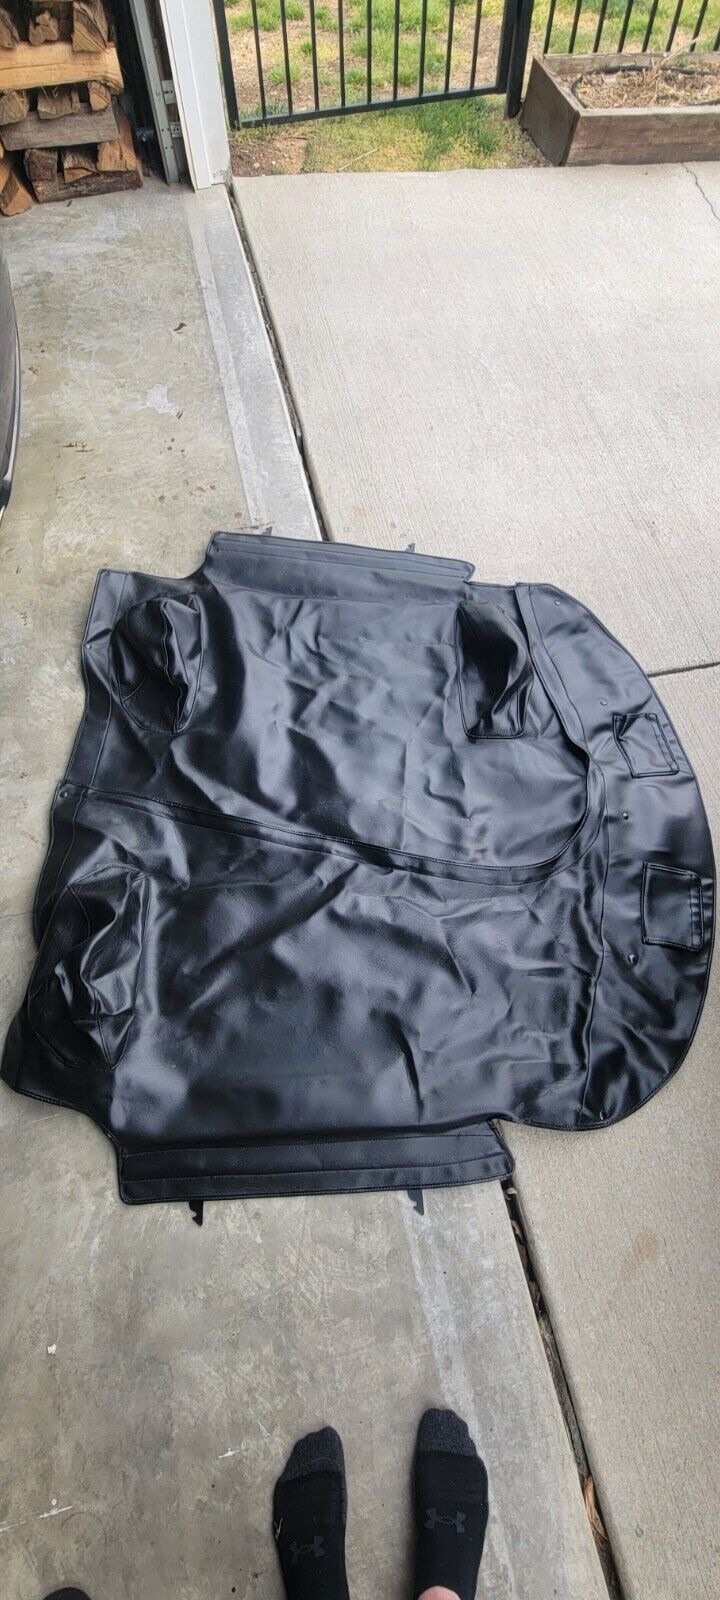 1996 Dodge Viper RT10 Tonneau Cover Original Black Leather Like New